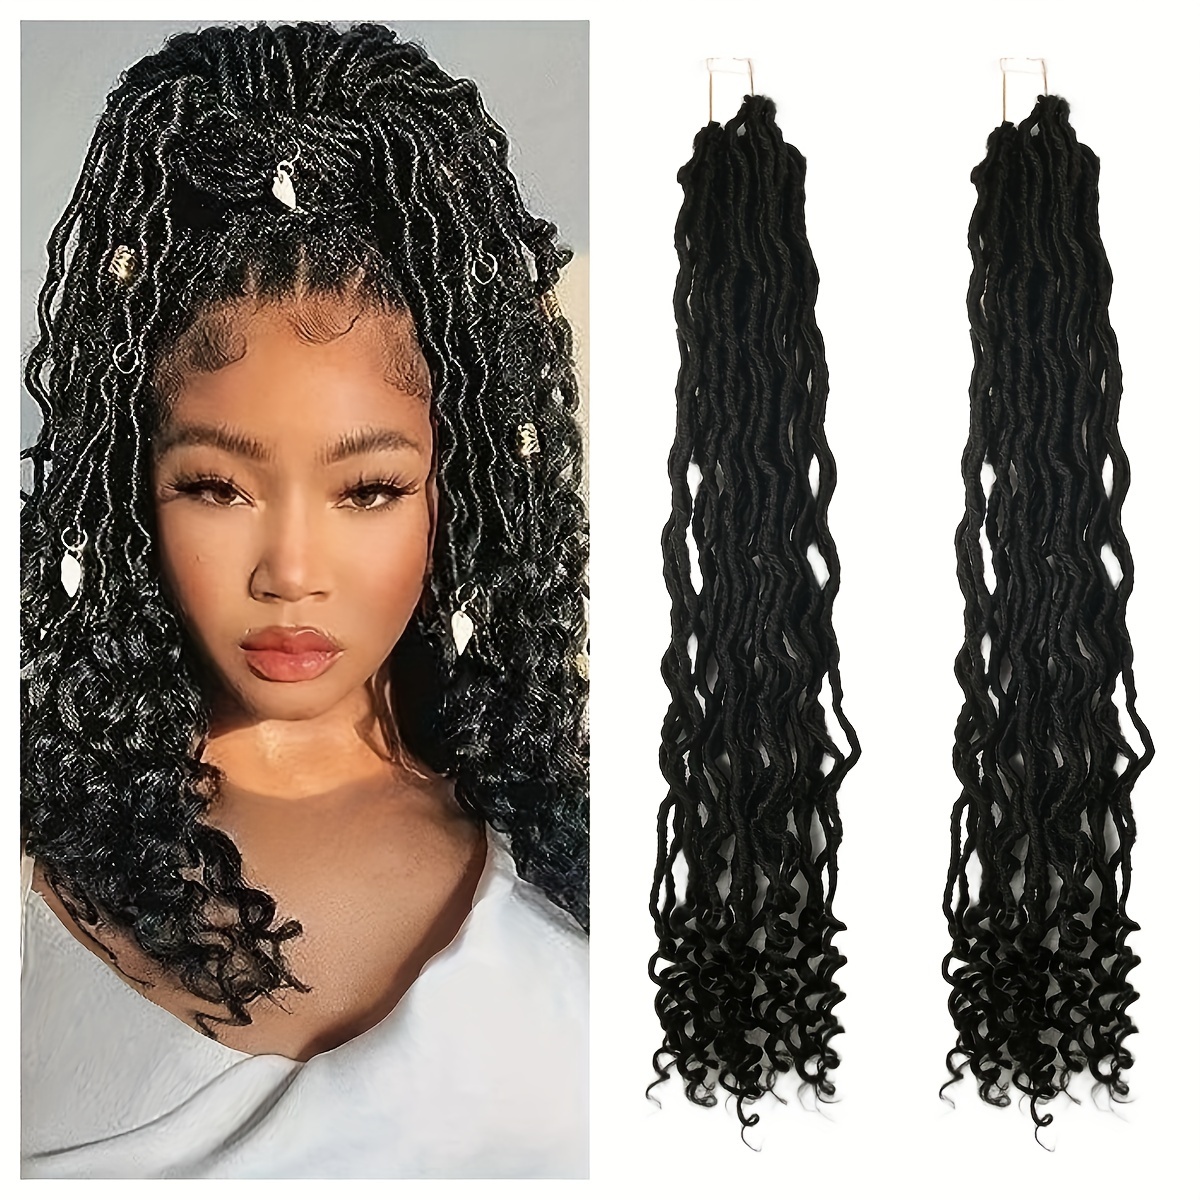 Goddess Box Braids Crochet Hair - 20 Inch 7 Packs - Natural Black